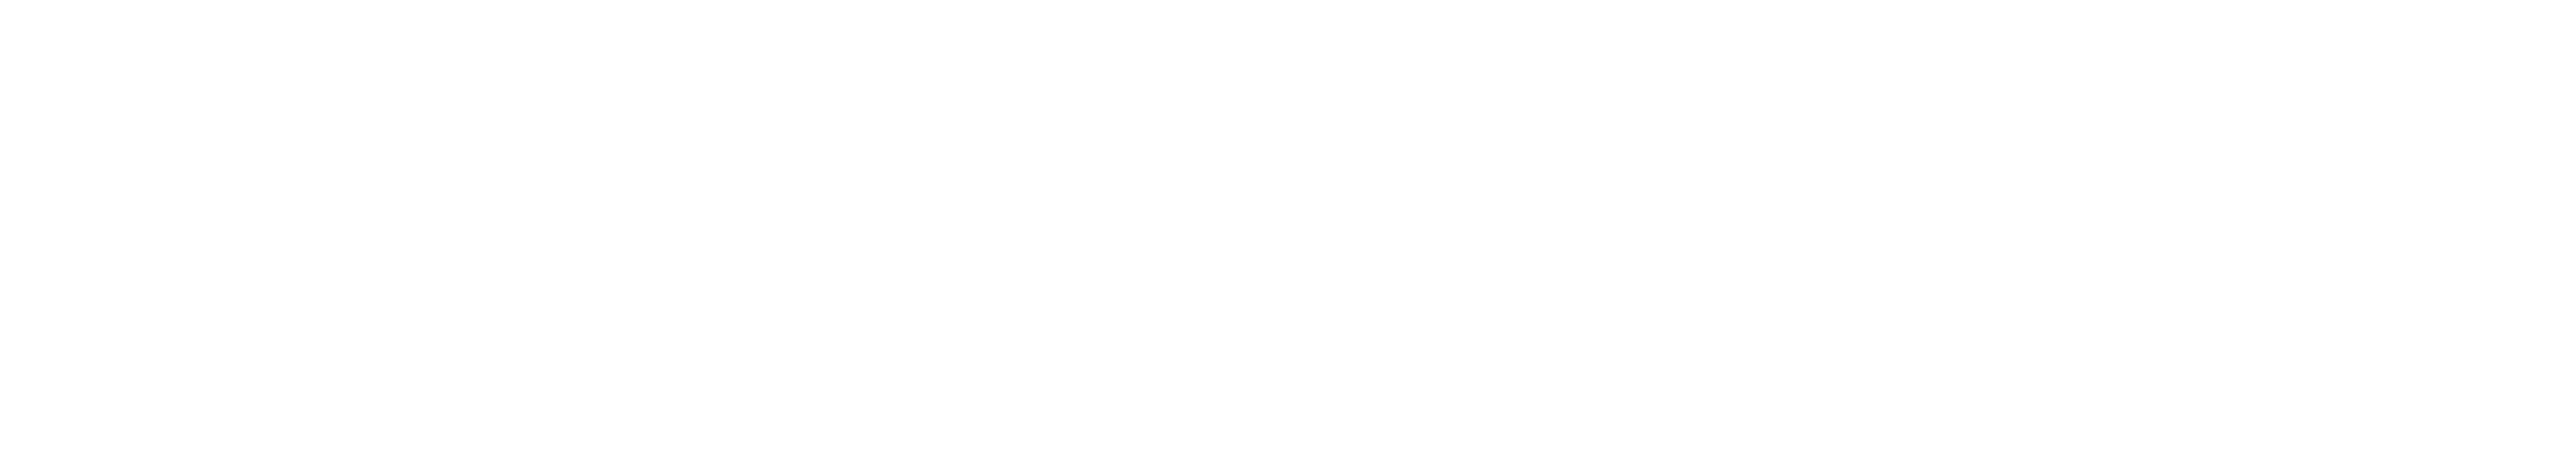 noble nutrition logo